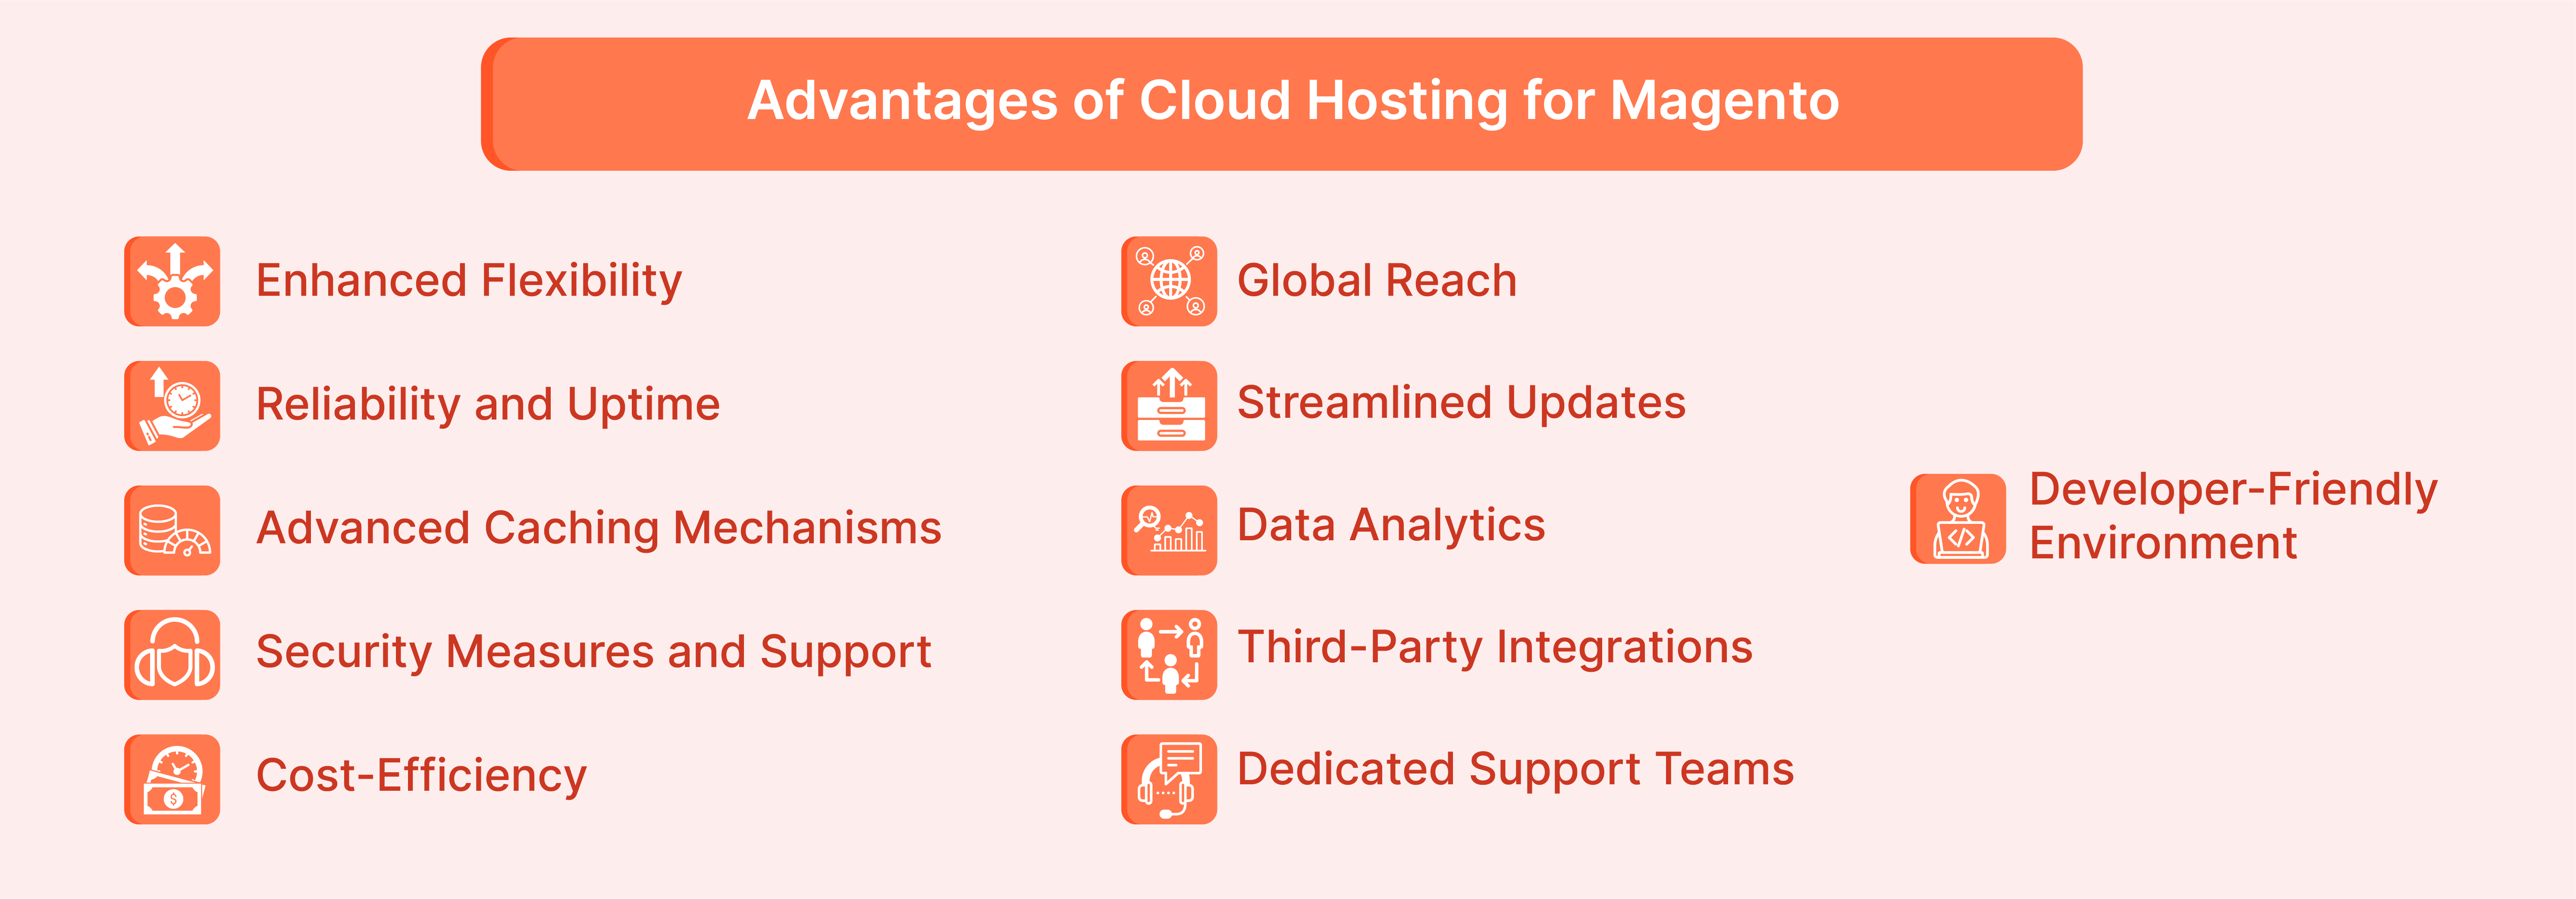 Key Advantages of Using Cloud Hosting for Magento Websites